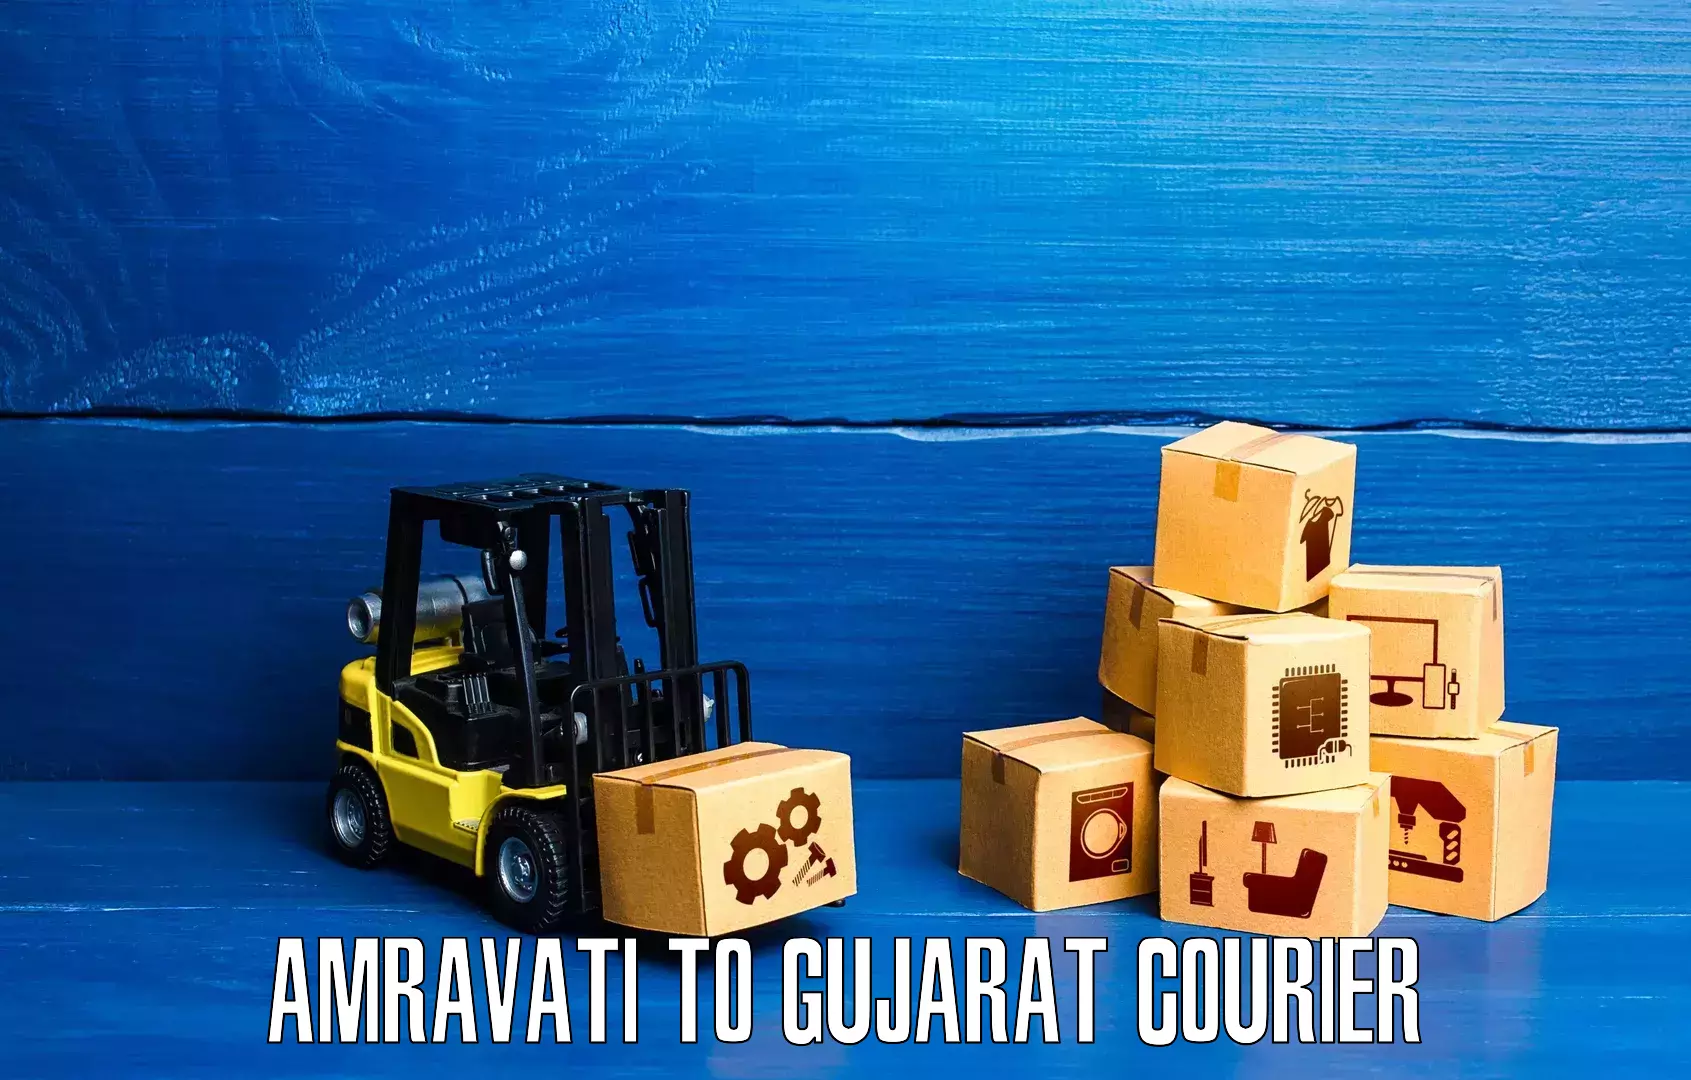 Courier service innovation Amravati to Surat